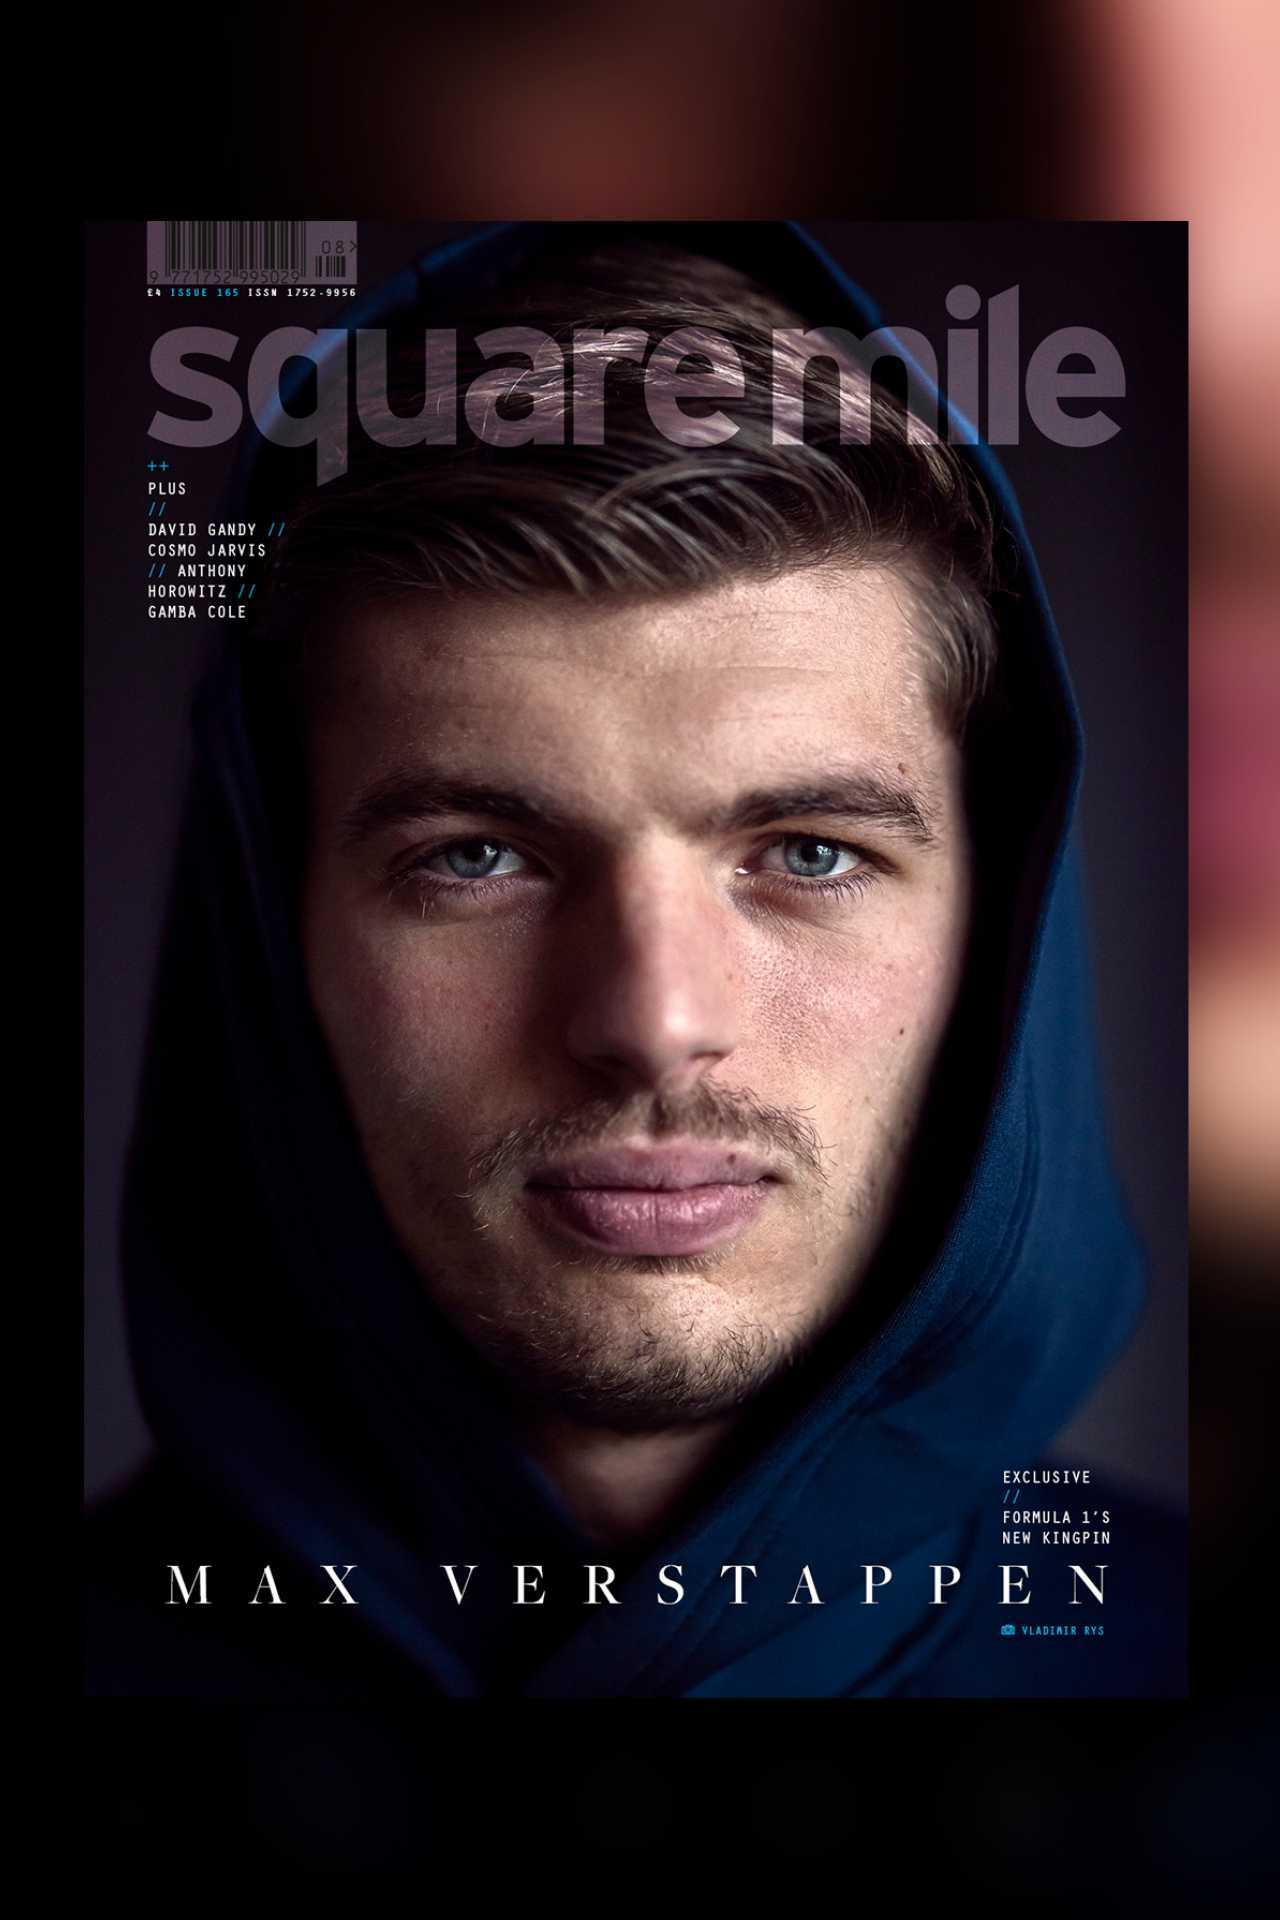 Max Verstappen for Square Mile magazine